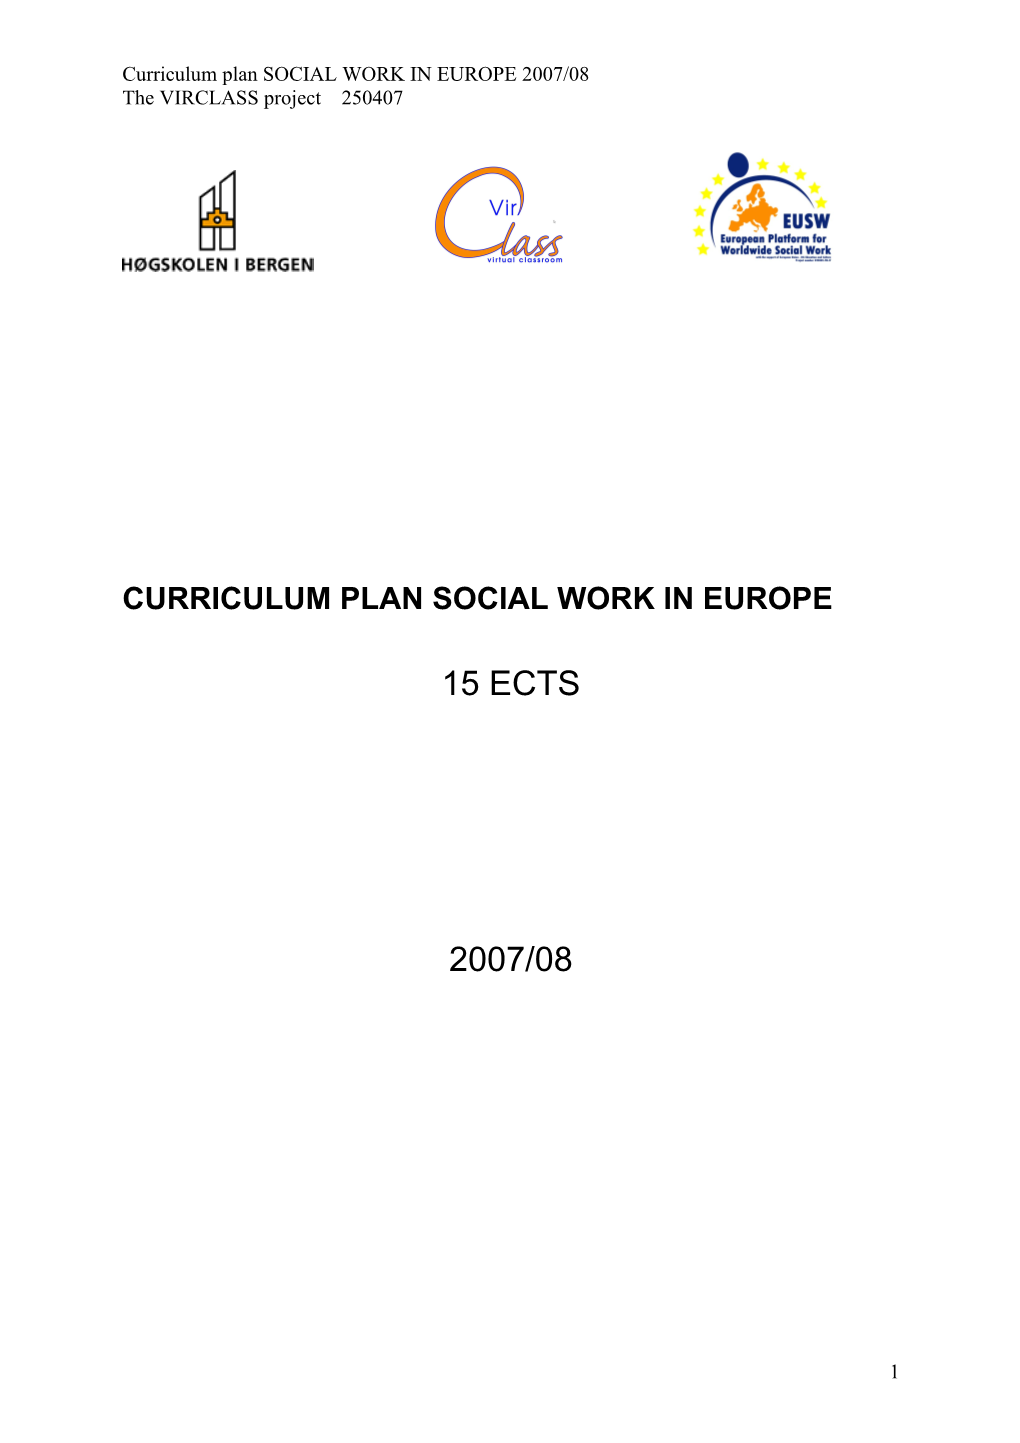 Curriculum Plan SOCIAL WORK in EUROPE 2007/08